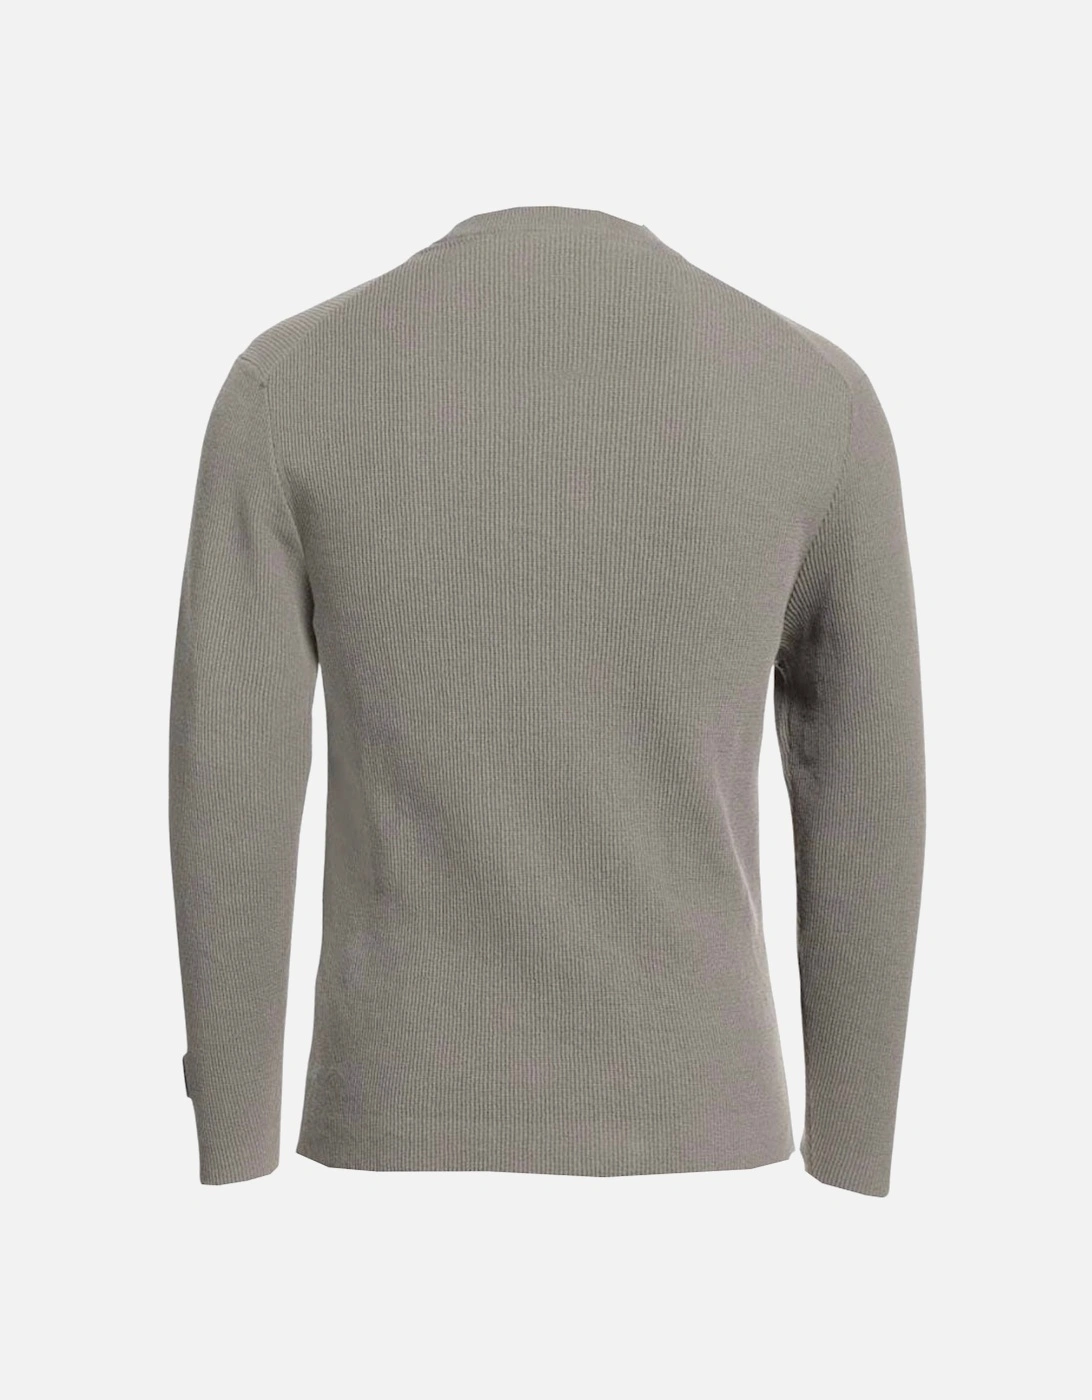 C.P. Company Metropolis Series Grey Knitted Sweatshirt